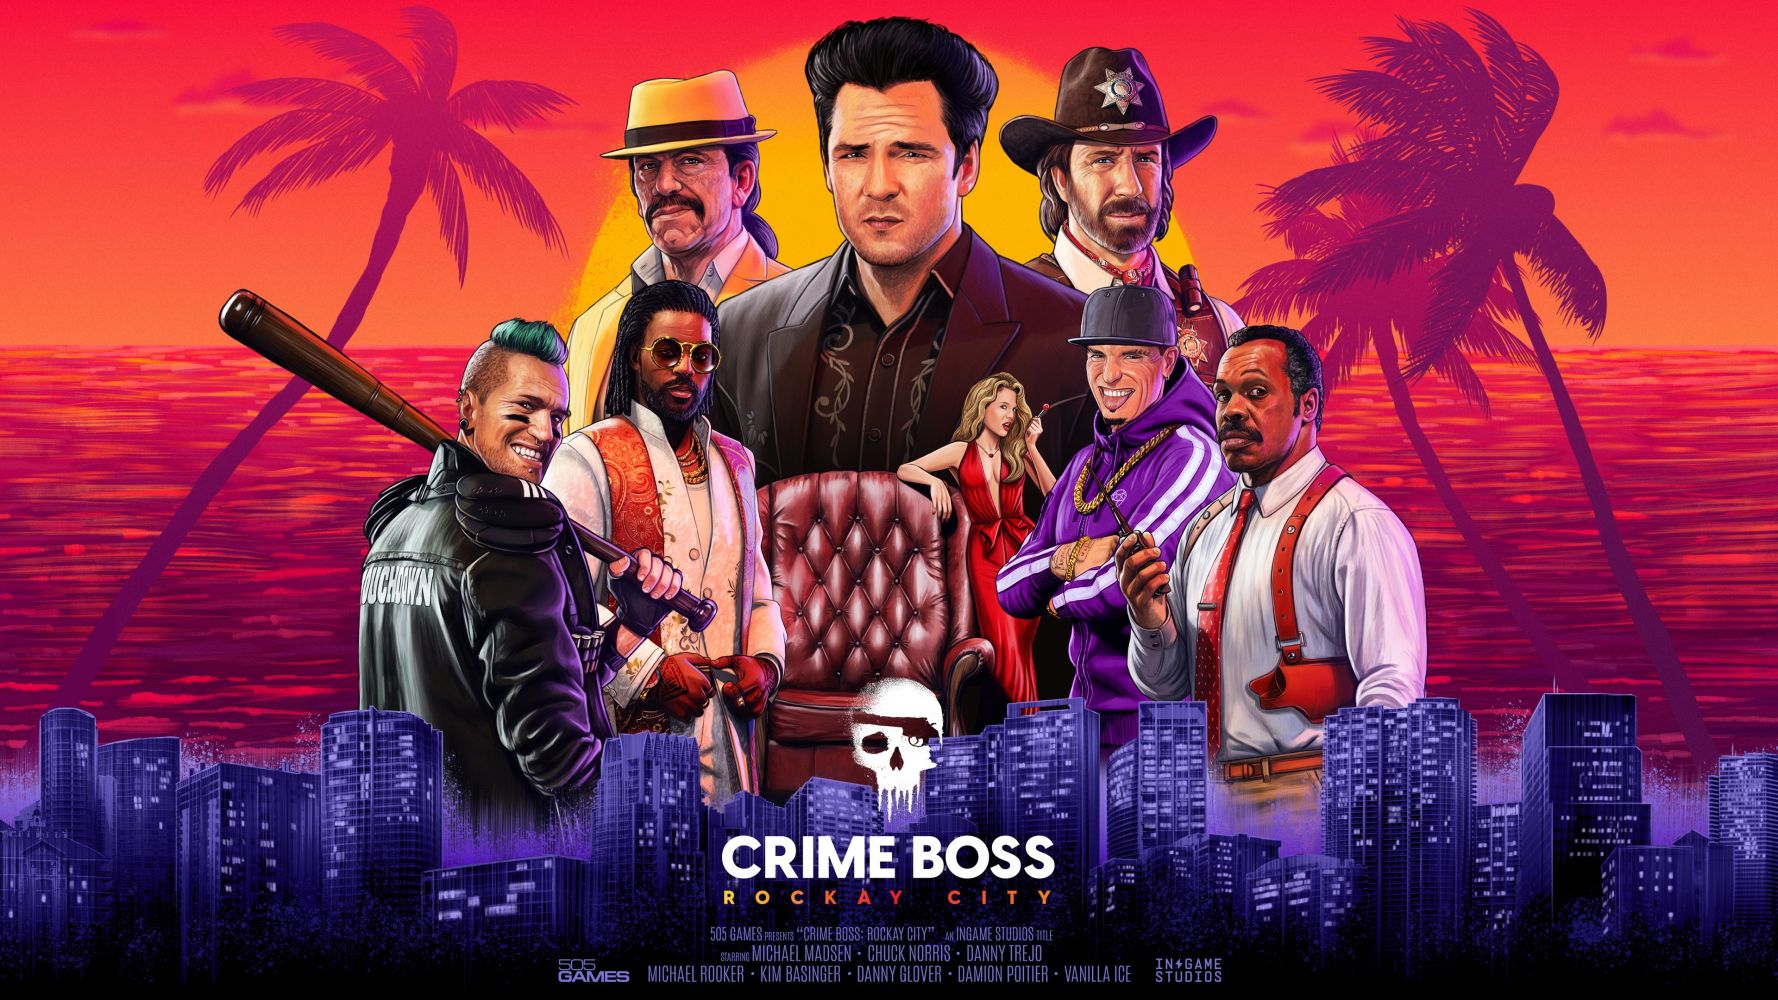 #Crime Boss: Rockay City lässt Gangster-Filme mit Star-Besetzung im GTA-Stil hochleben